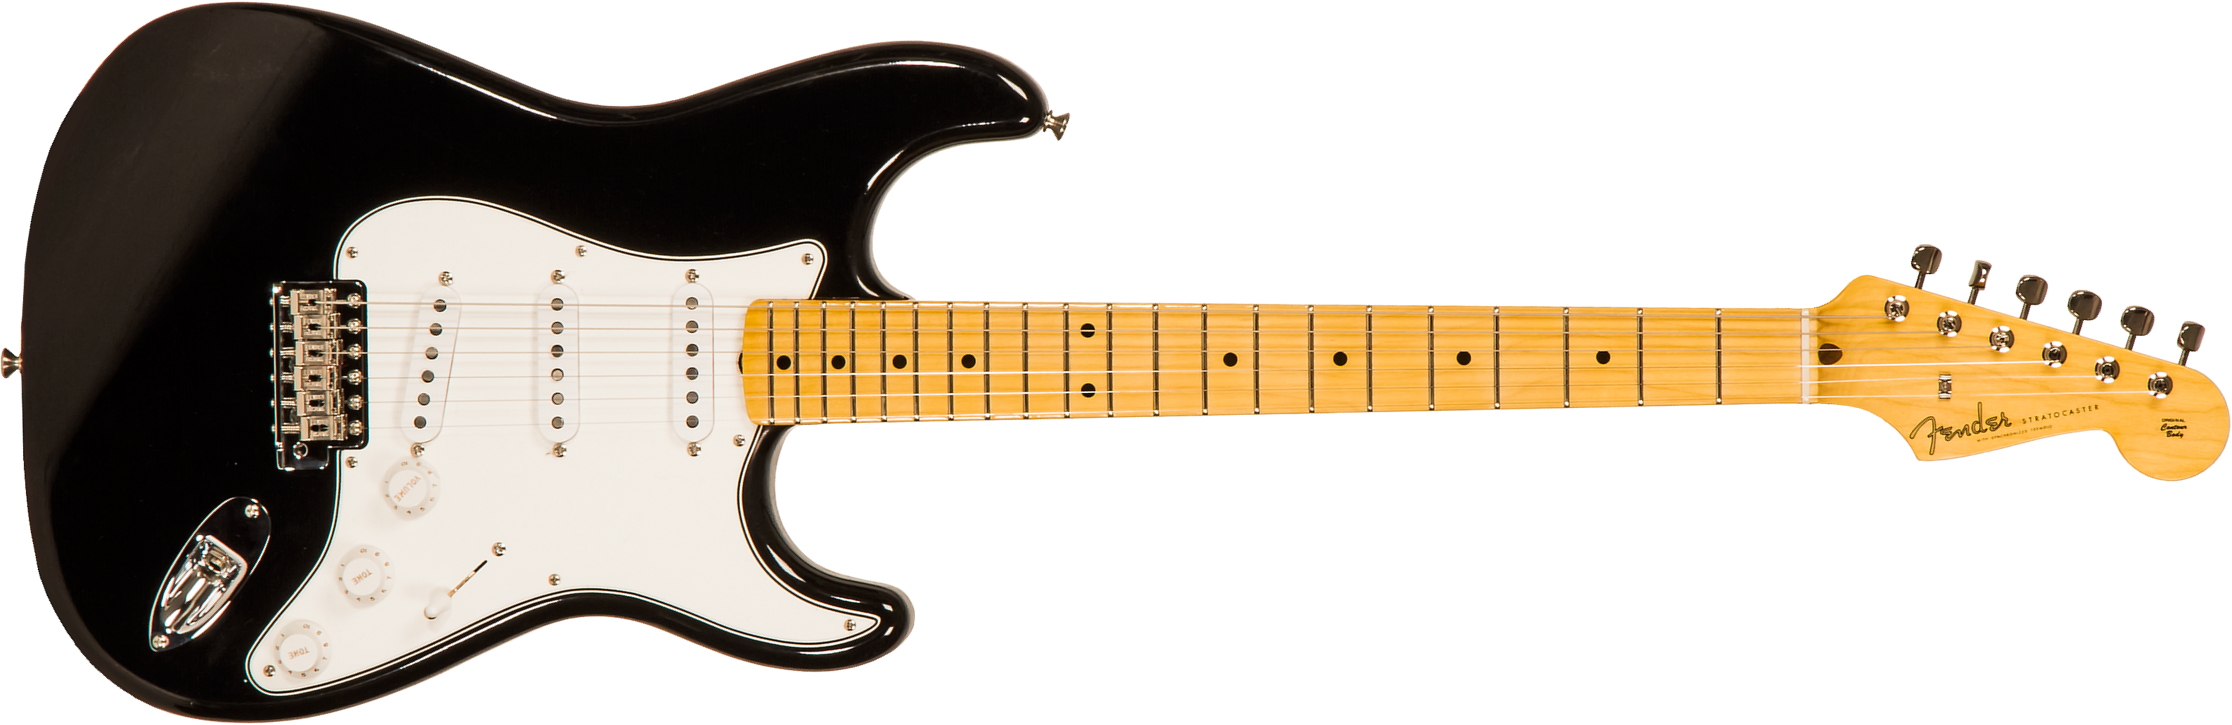 Fender Custom Shop Strat 1958 3s Trem Mn #r113828 - Closet Classic Black - E-Gitarre in Str-Form - Main picture